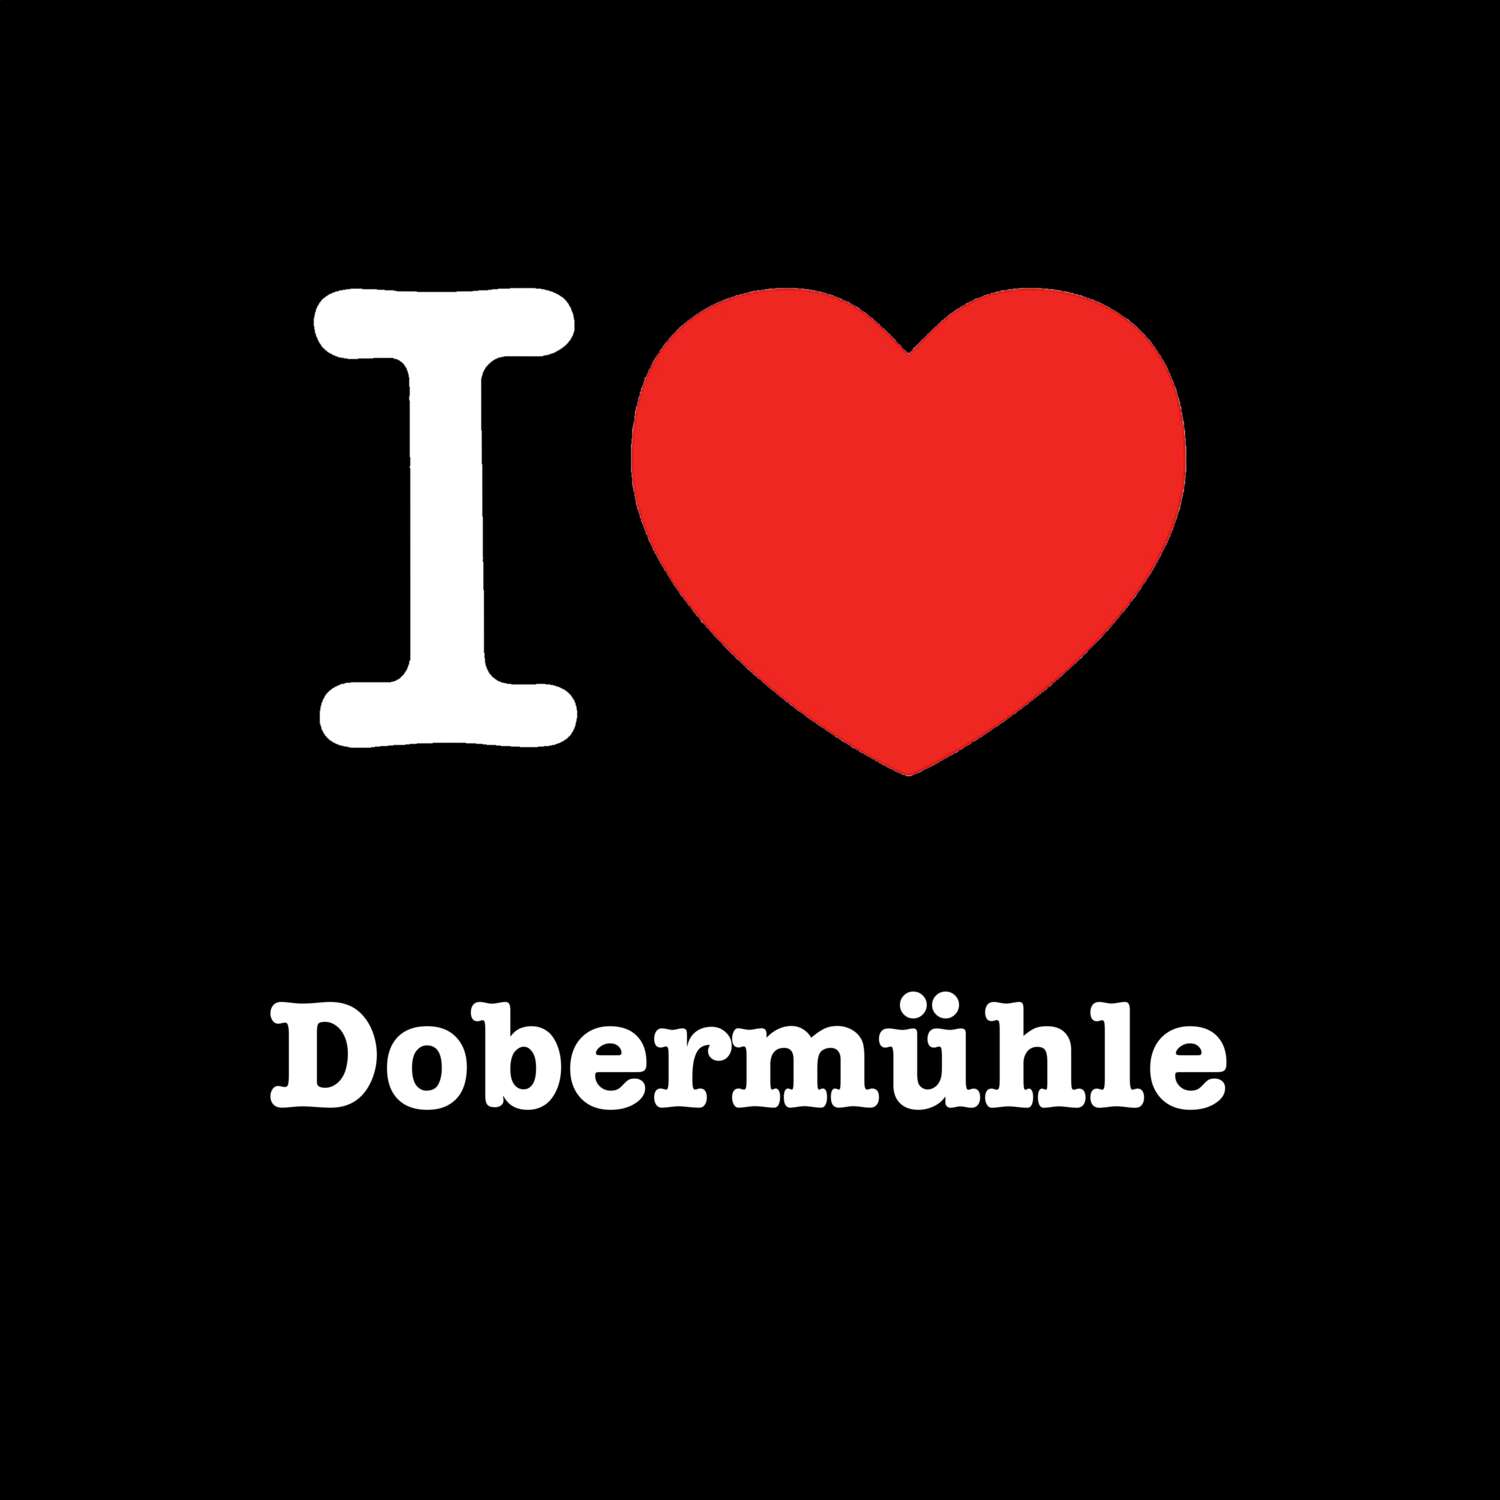 Dobermühle T-Shirt »I love«